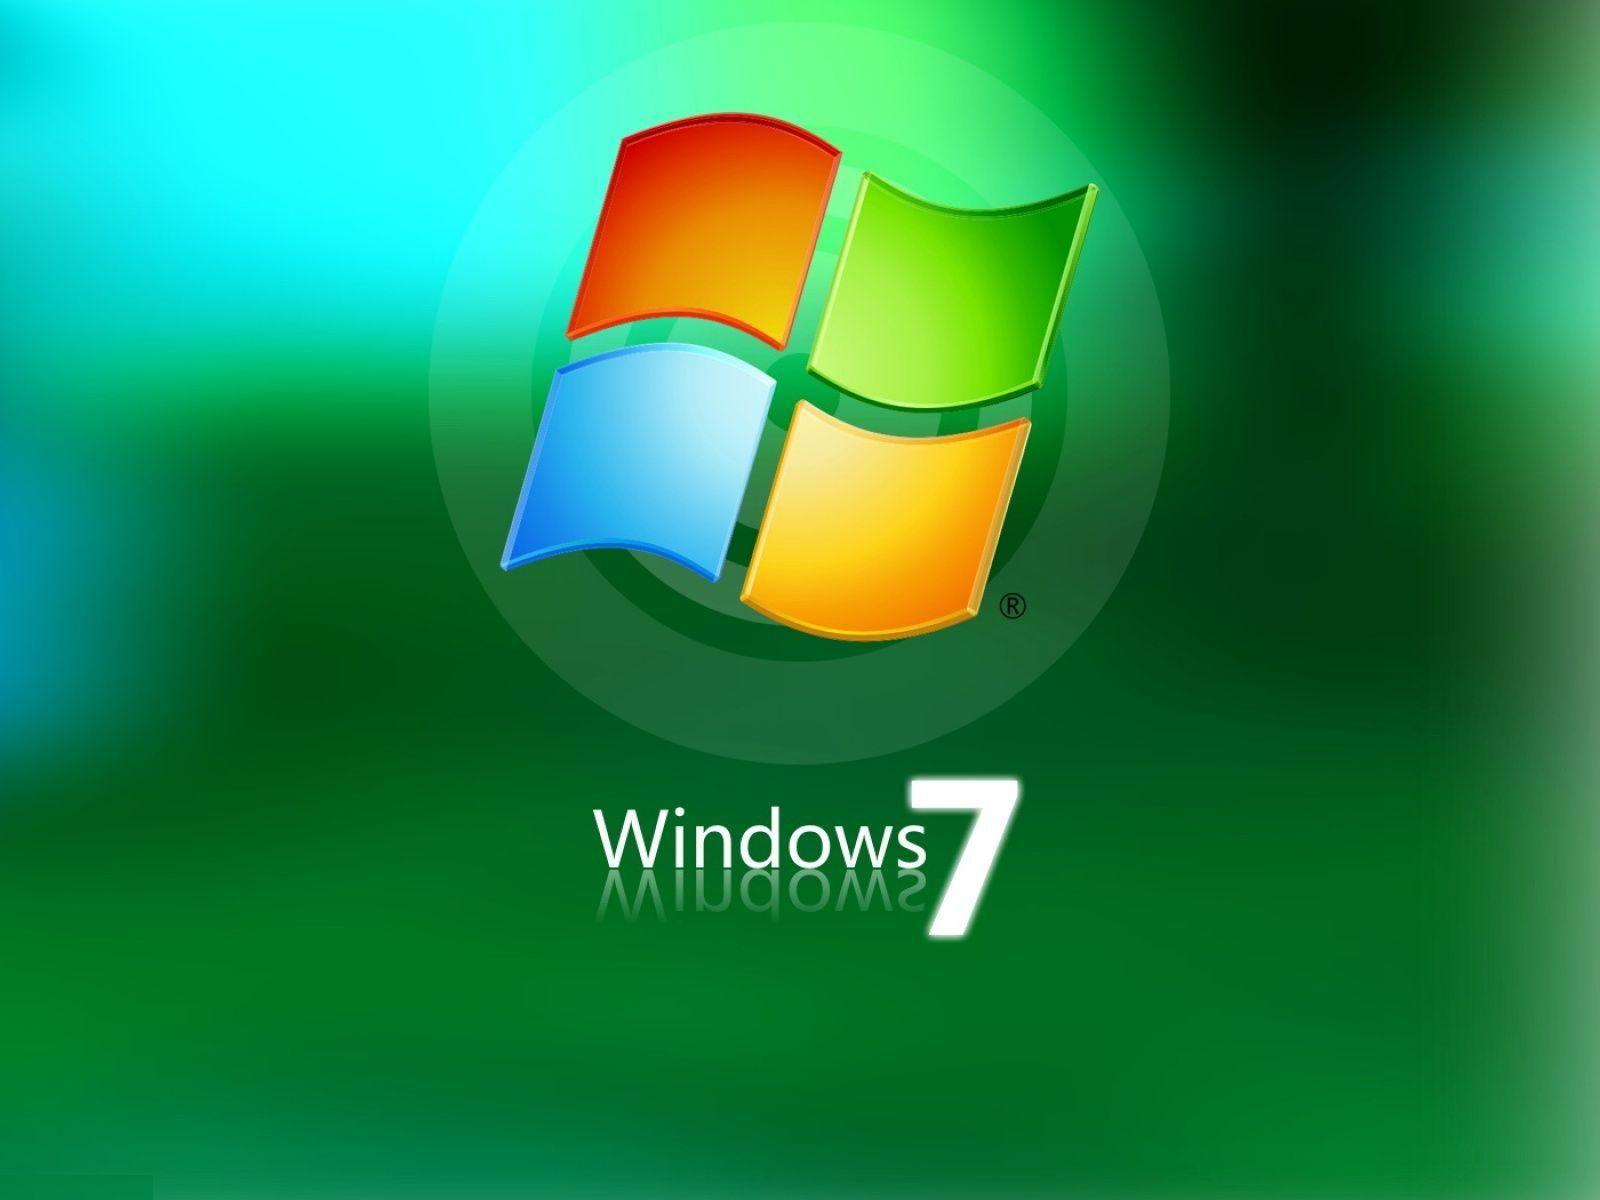 Wallpaper Windows 7 3d Paling Adem Image Num 85